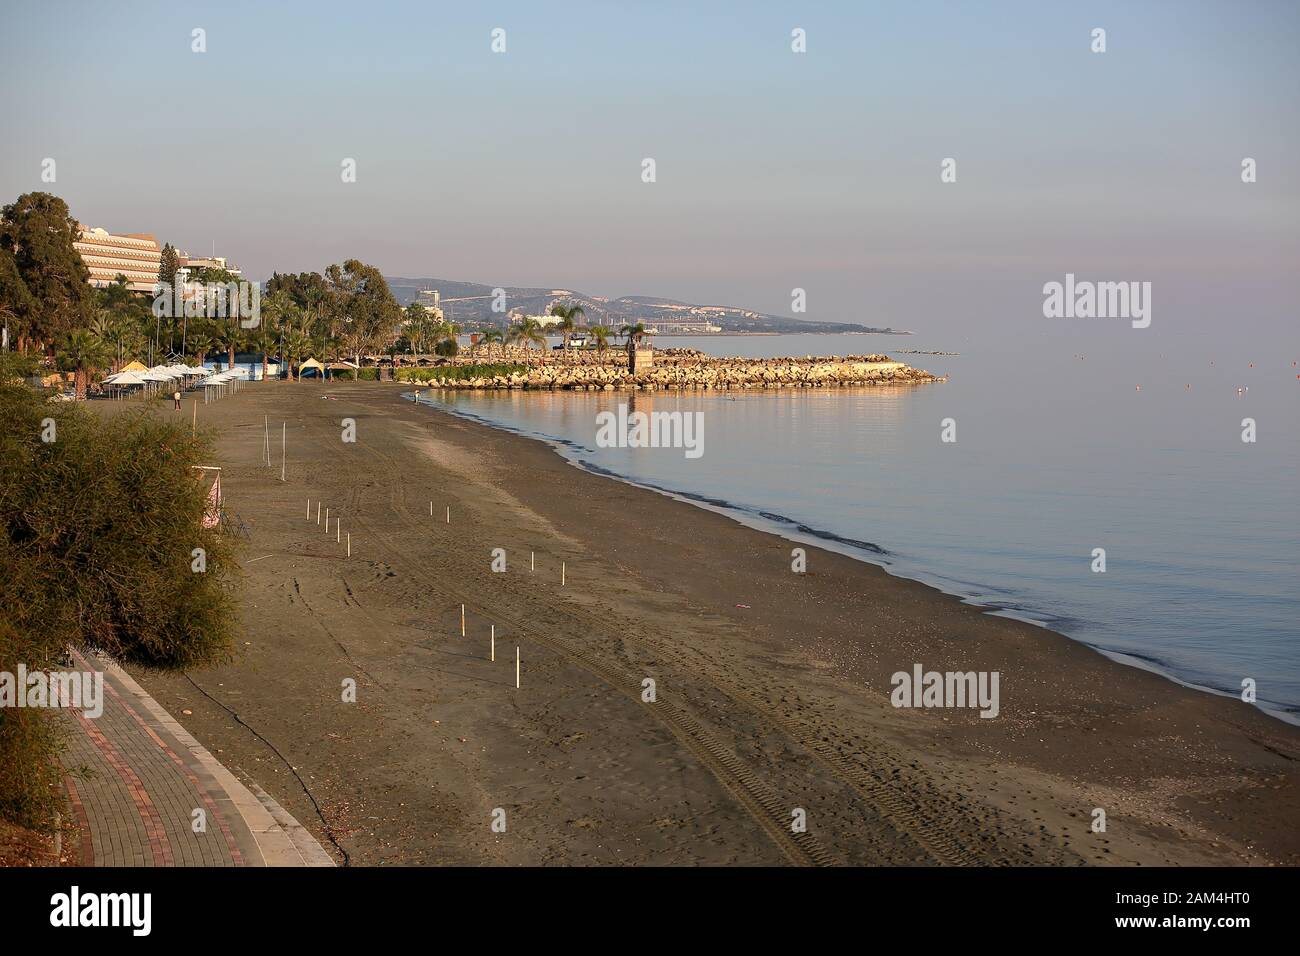 aearial landscape of sandy beach in Limassol, Cyprus, Mediterranean sea, promenade, shore. Stock Photo